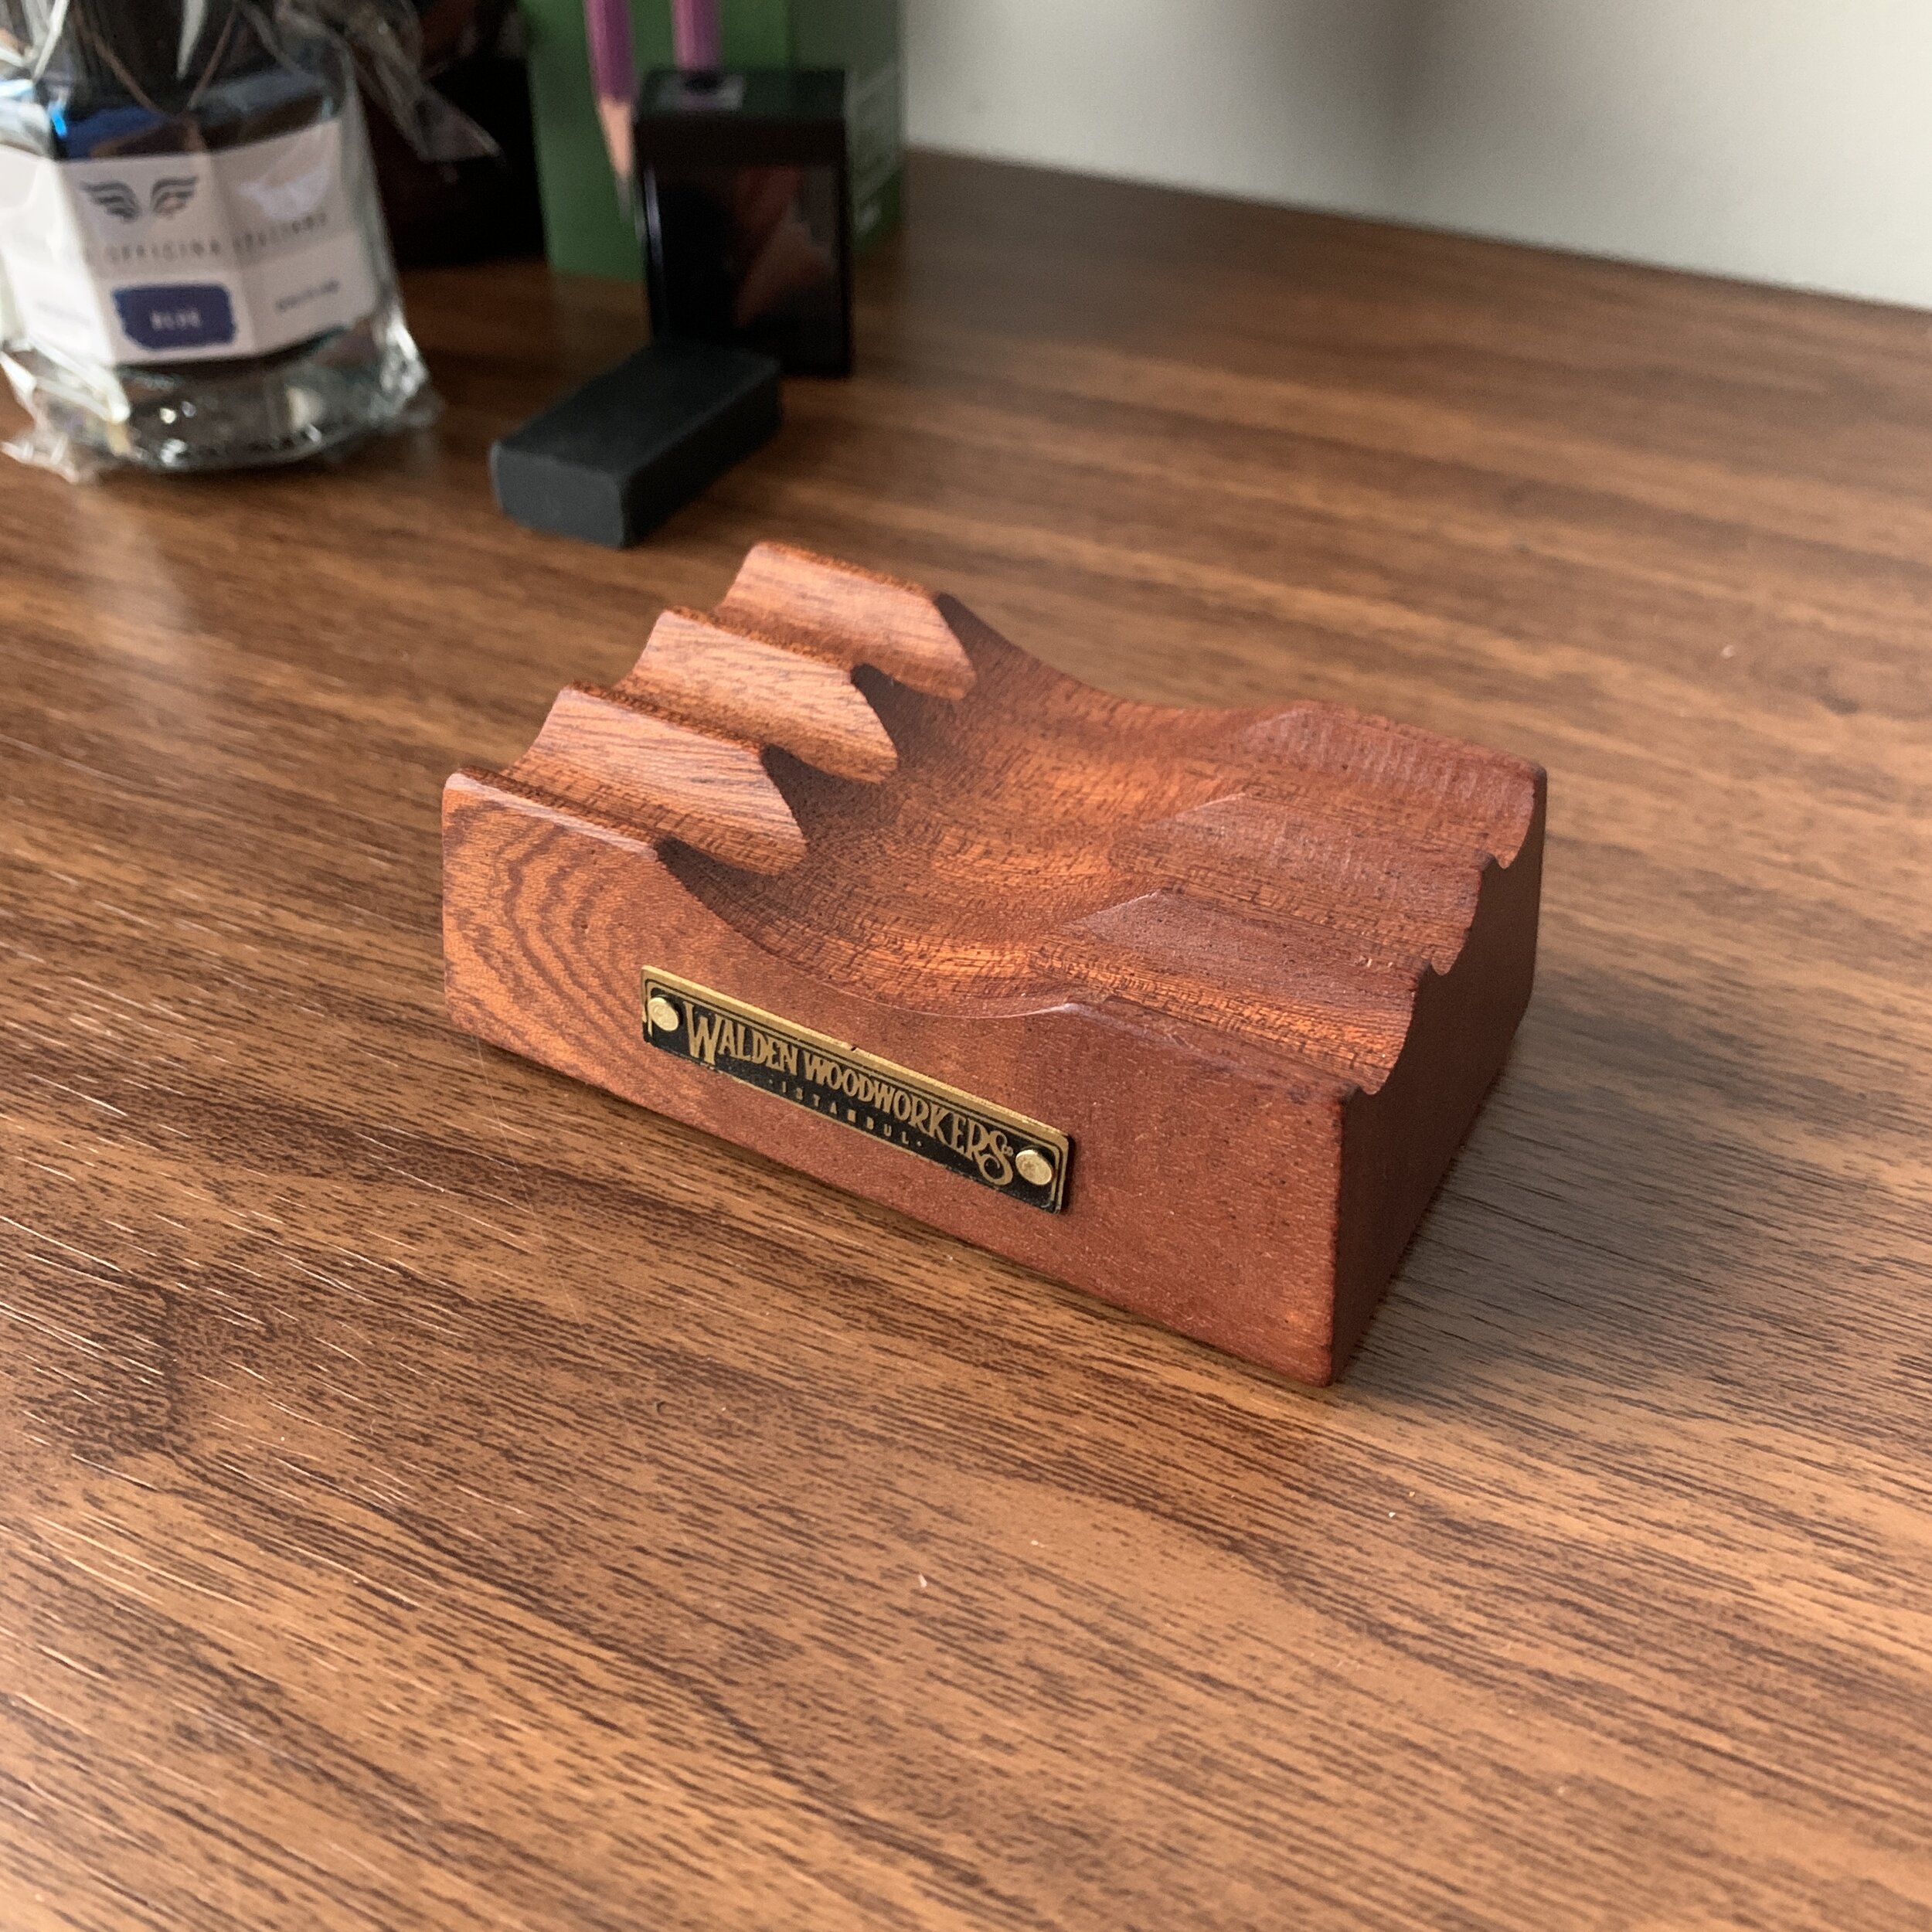 Wood desk accessories